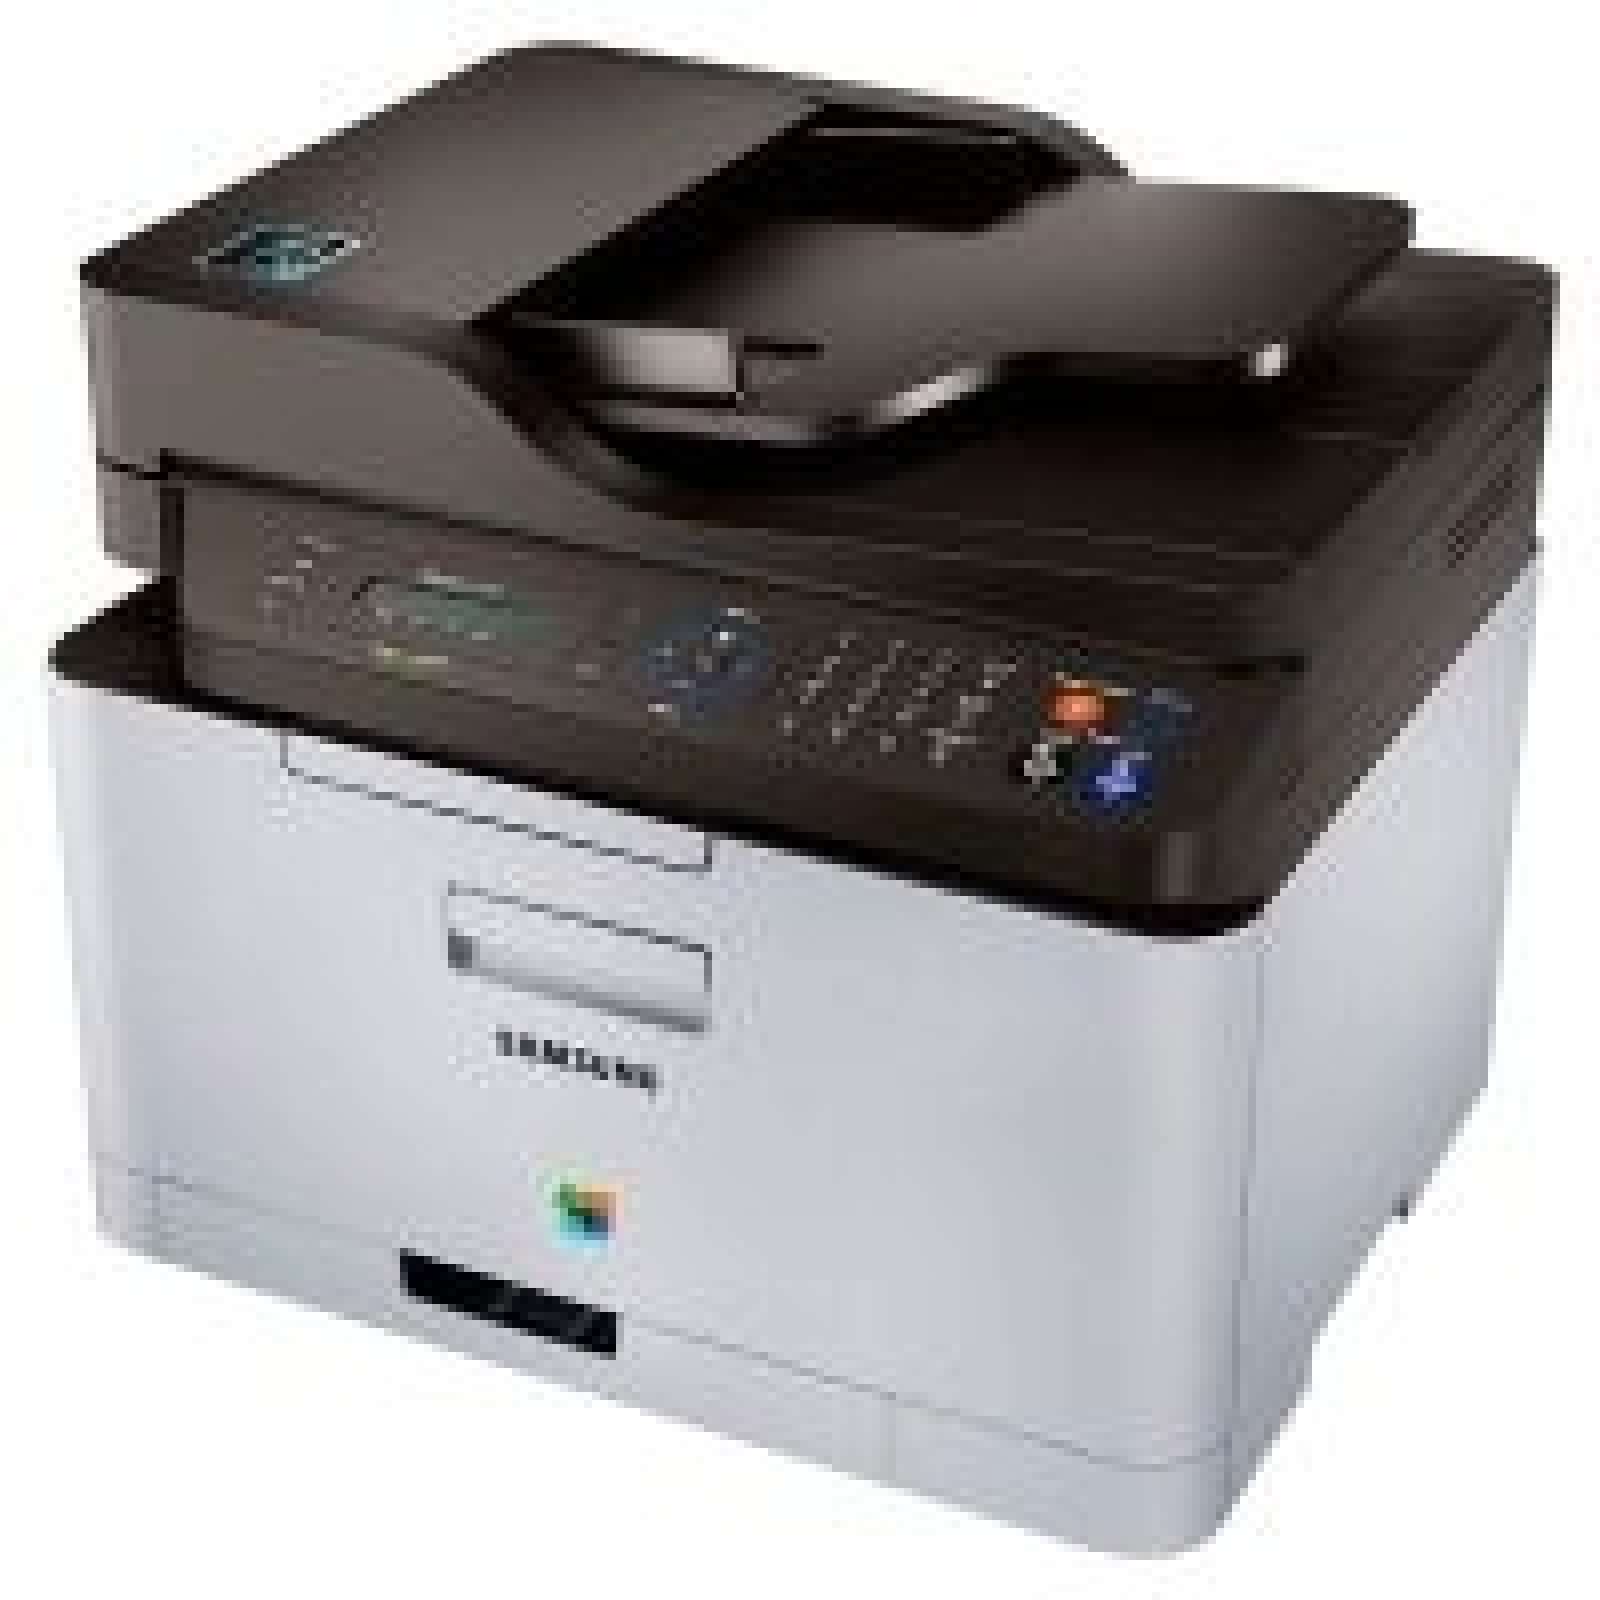 Samsung xpress c460w easy printer manager